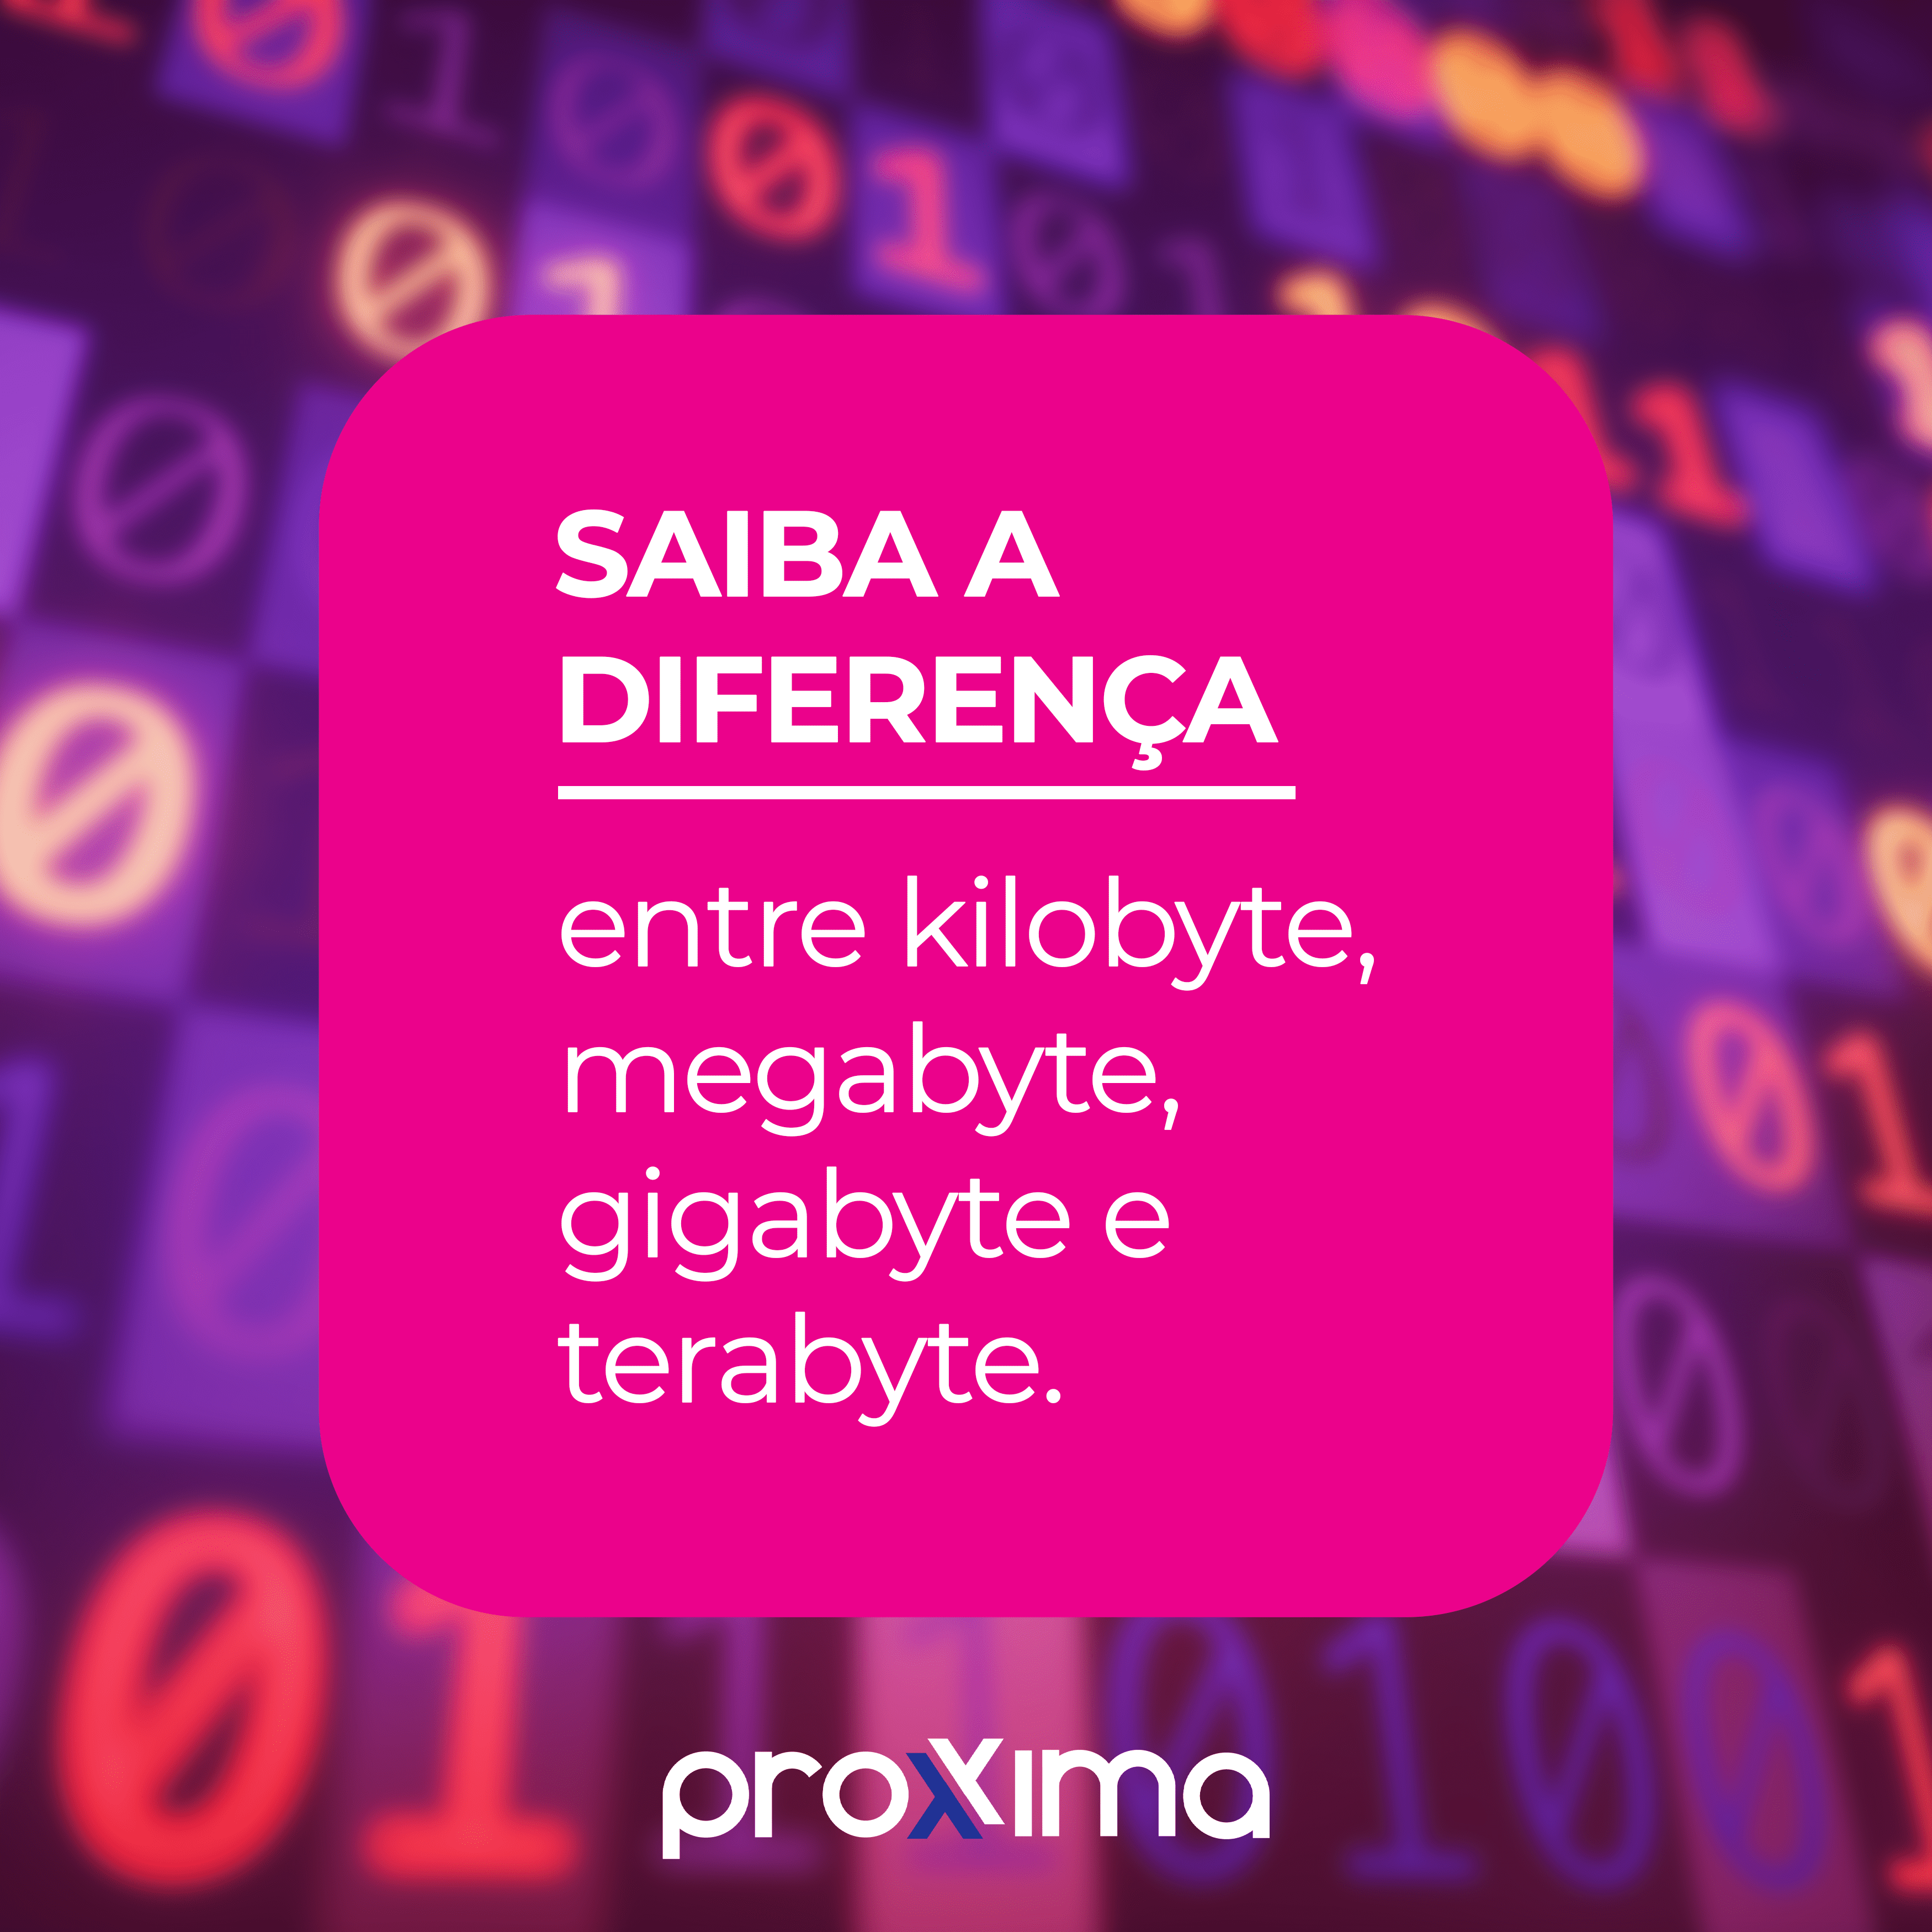 Saiba a diferença entre kilobyte, megabyte, gigabyte e terabyte